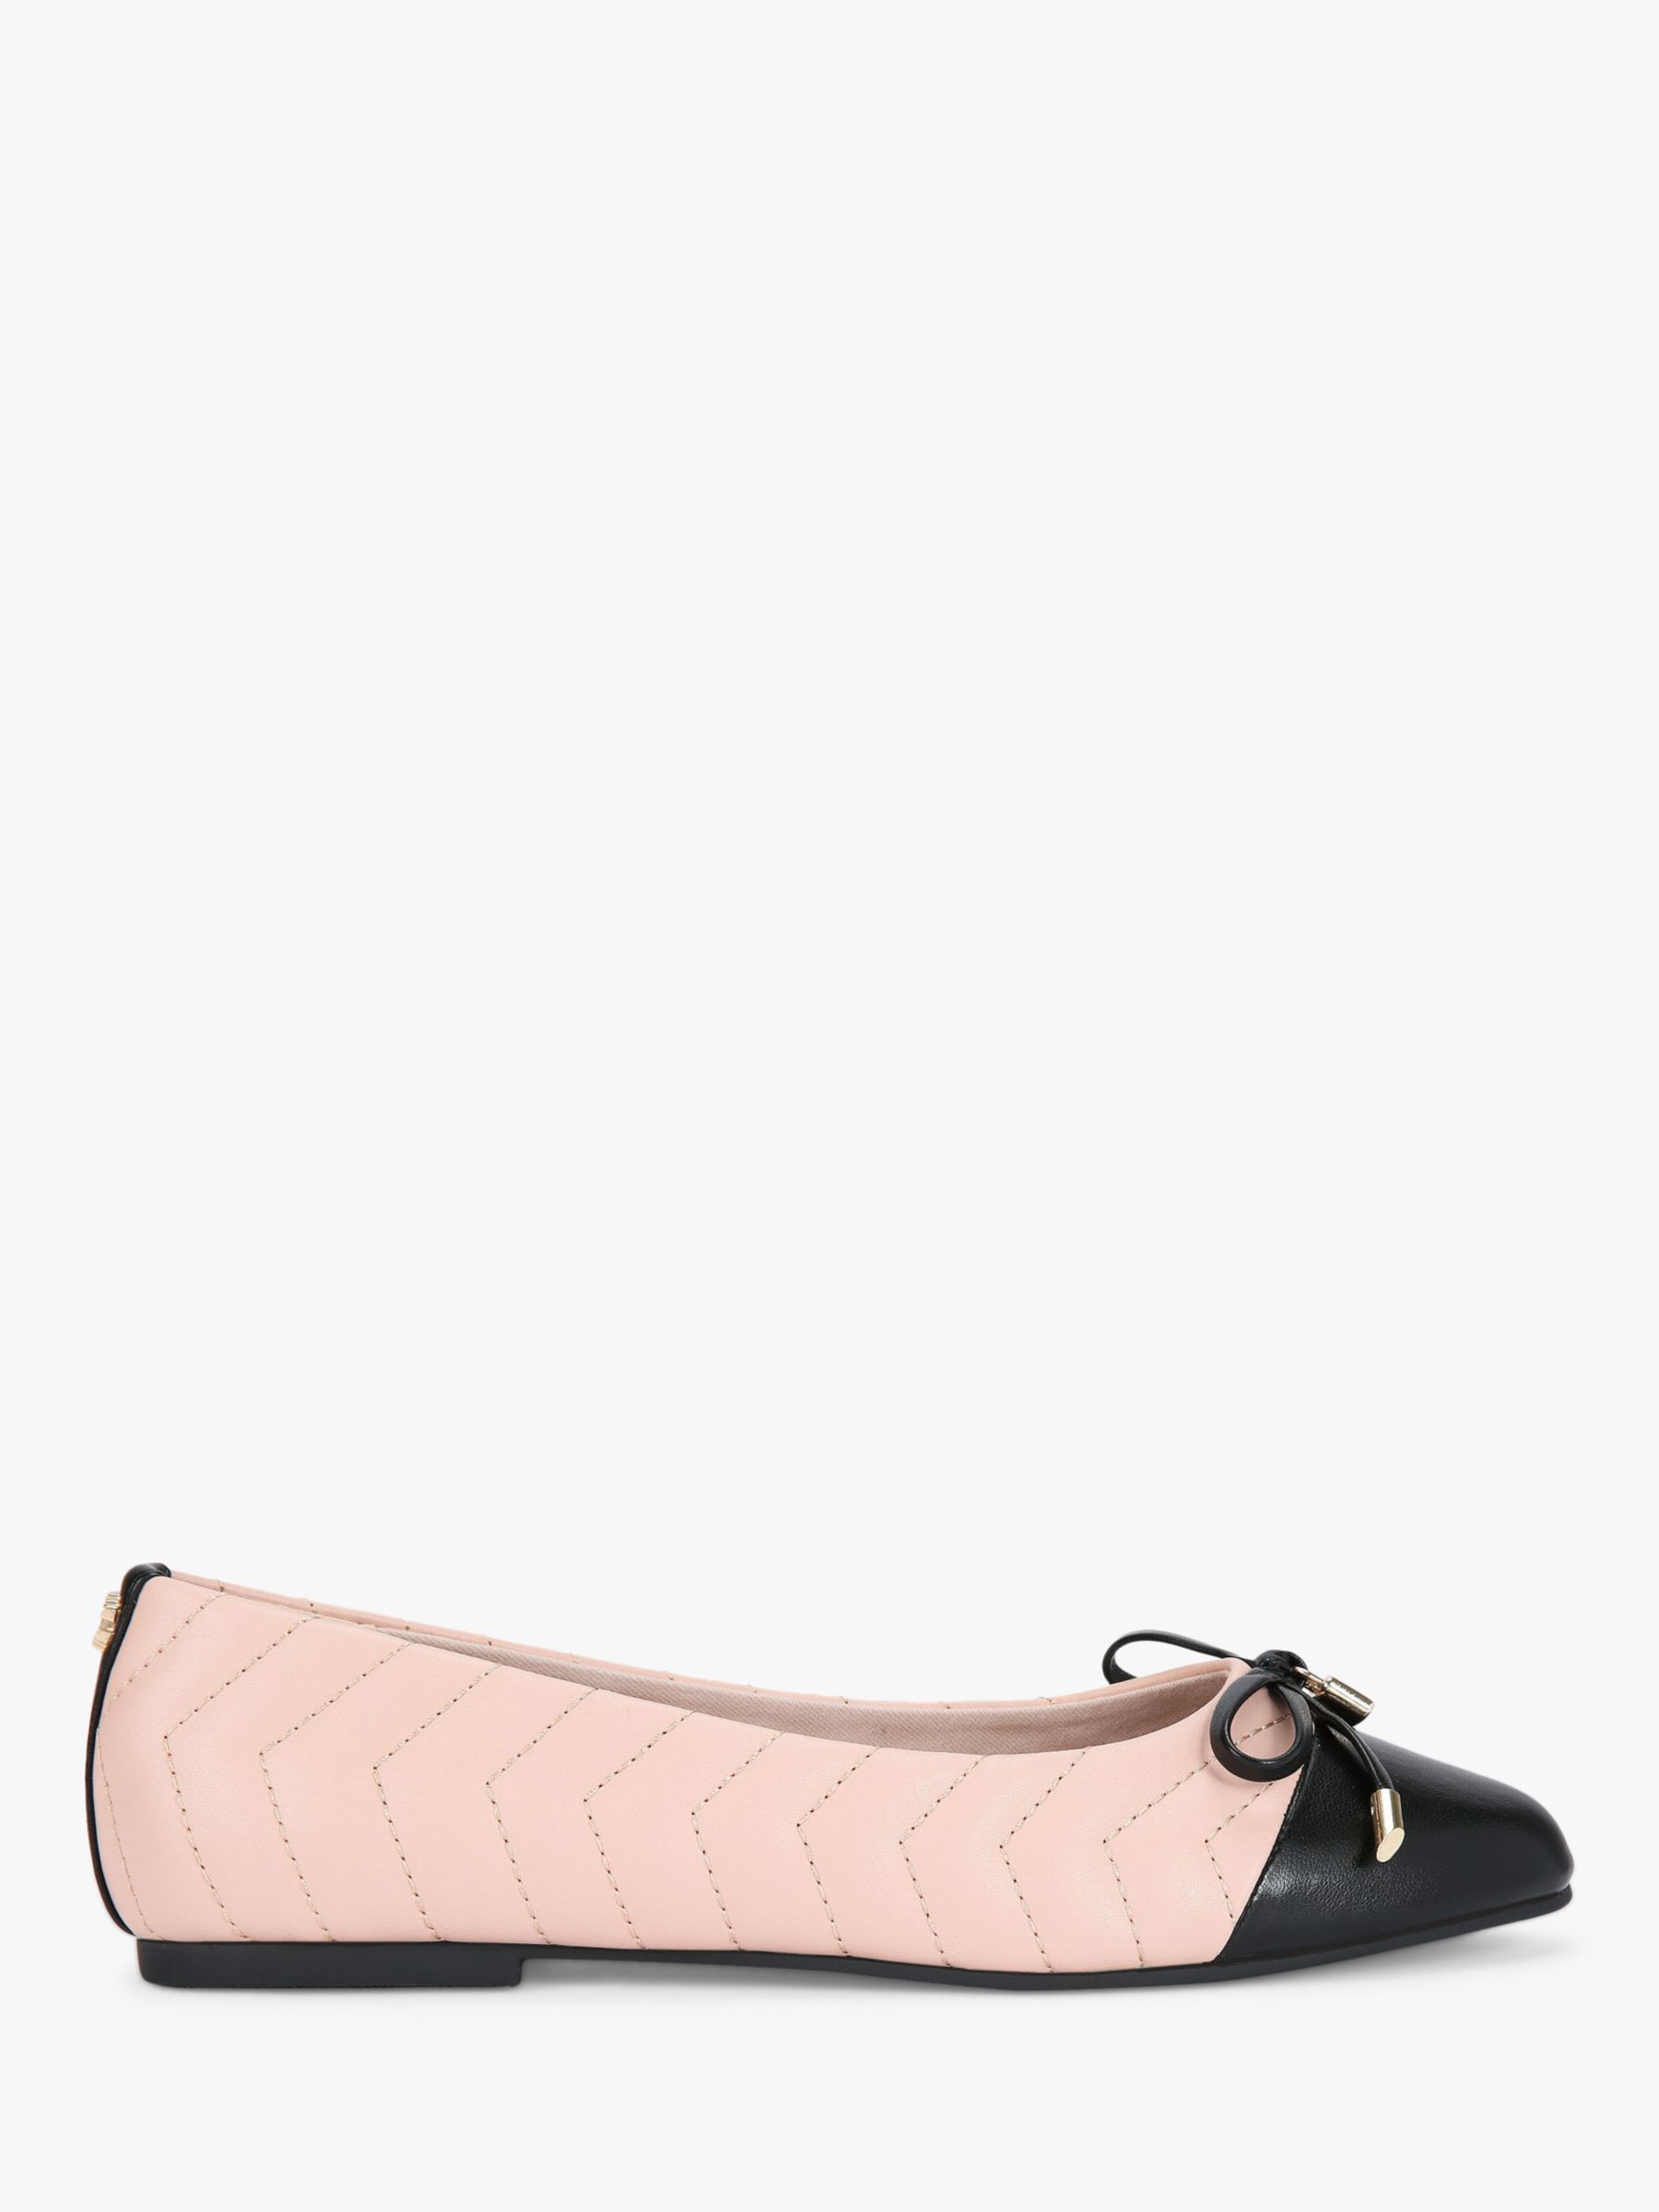 Carvela Lara Ballerina Shoes, Pink/Black, 7